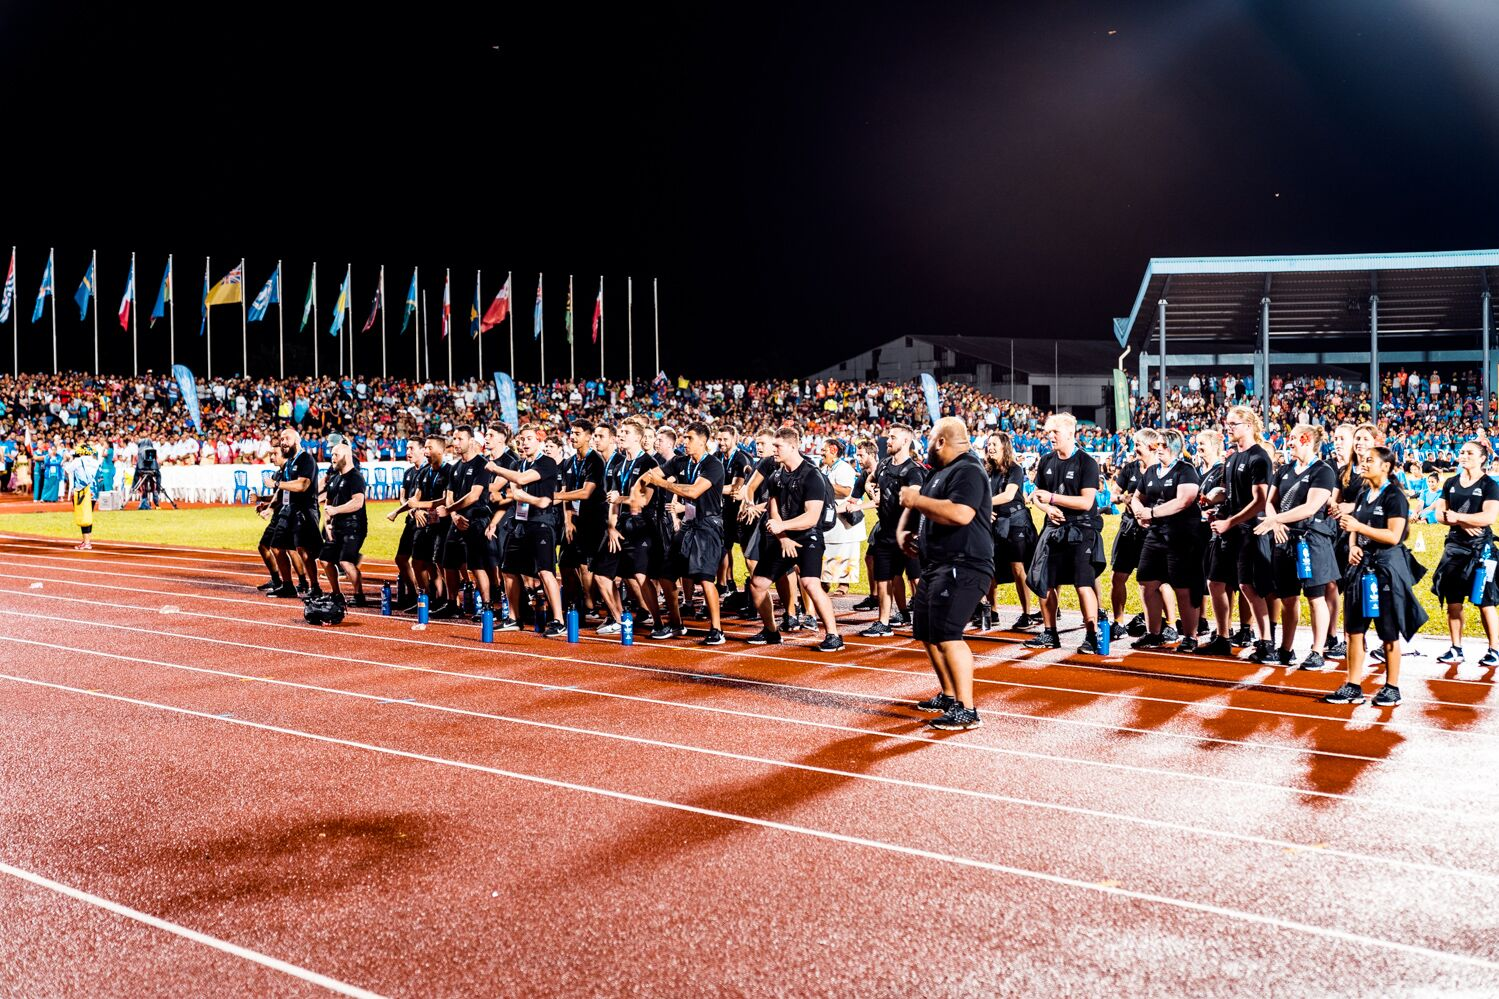 New Zealand have participated in five sports at Samoa 2019 ©Samoa 2019